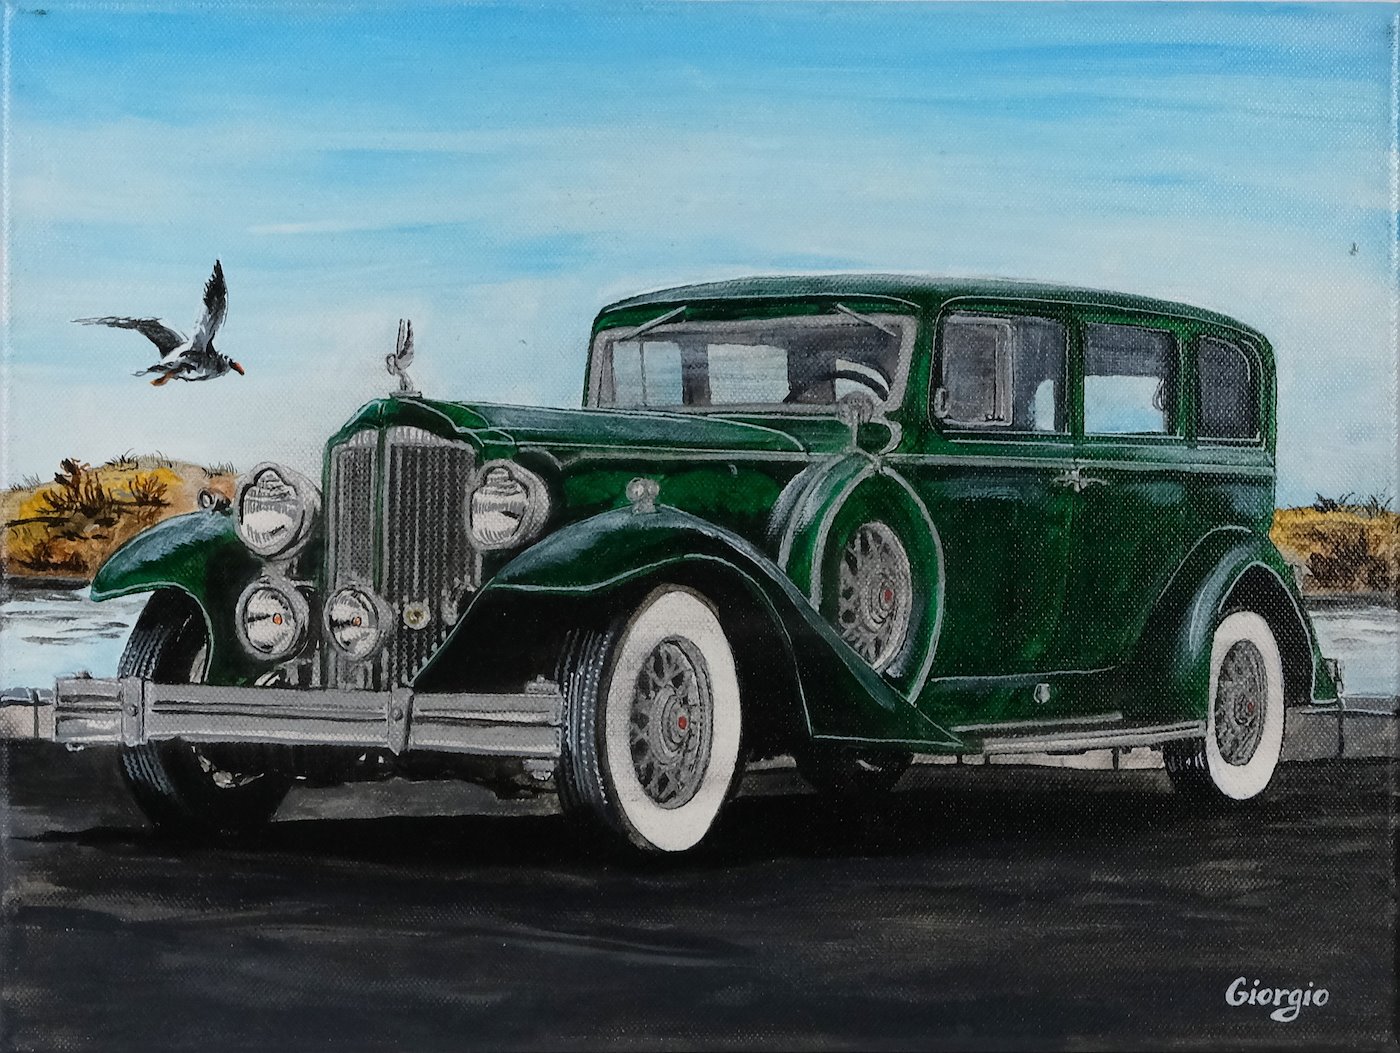 Giorgio - 1933 Packard Super 8